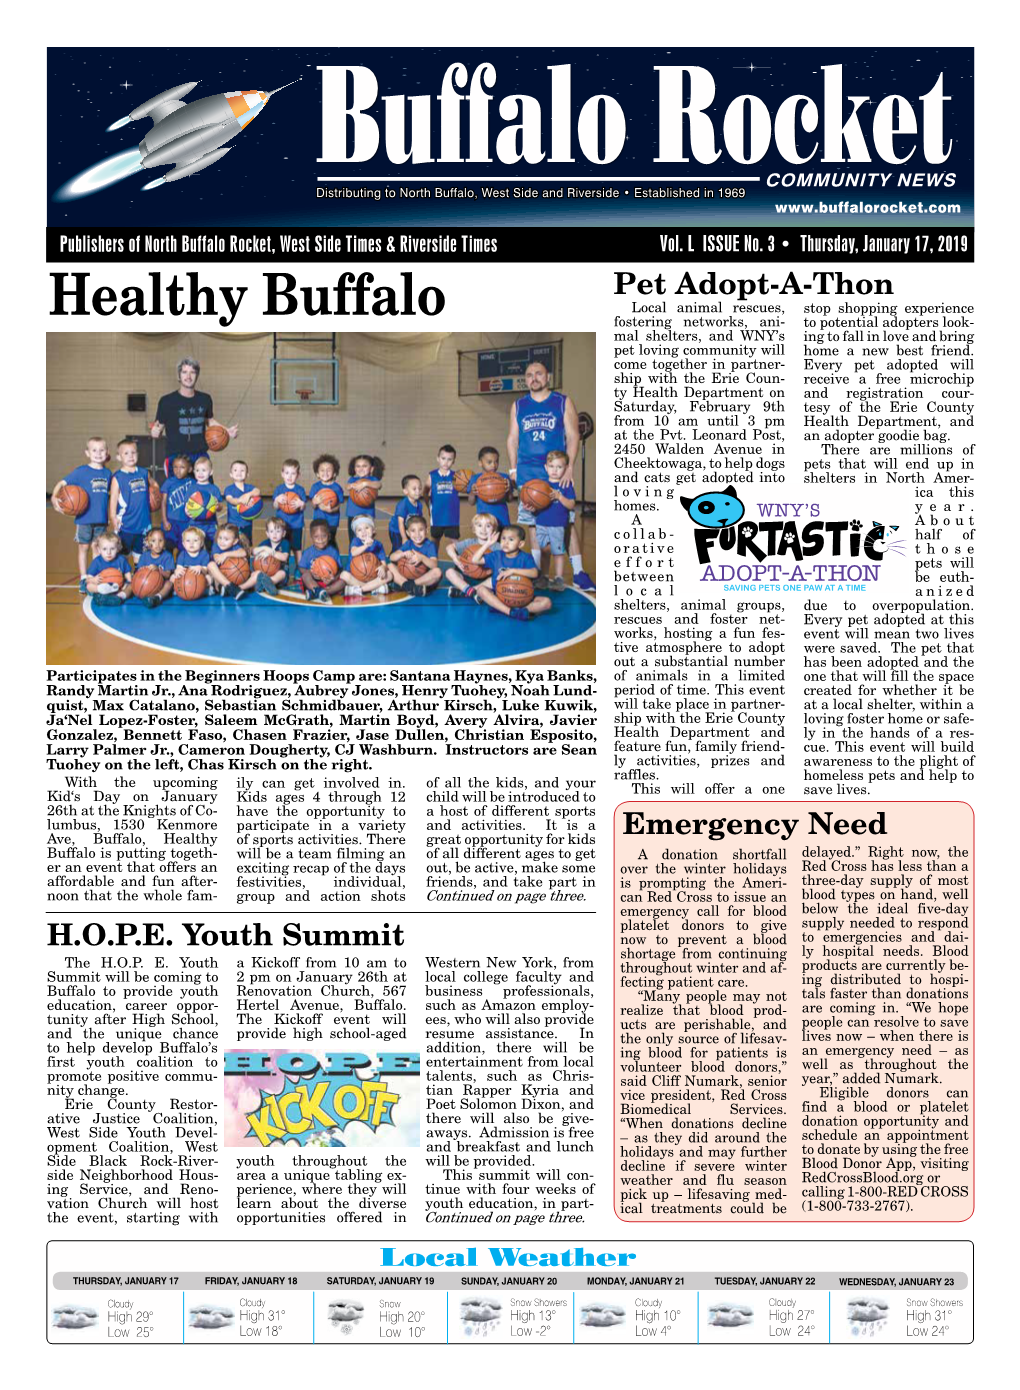 2019 Buffalo Rocket Issue 3 Page 3